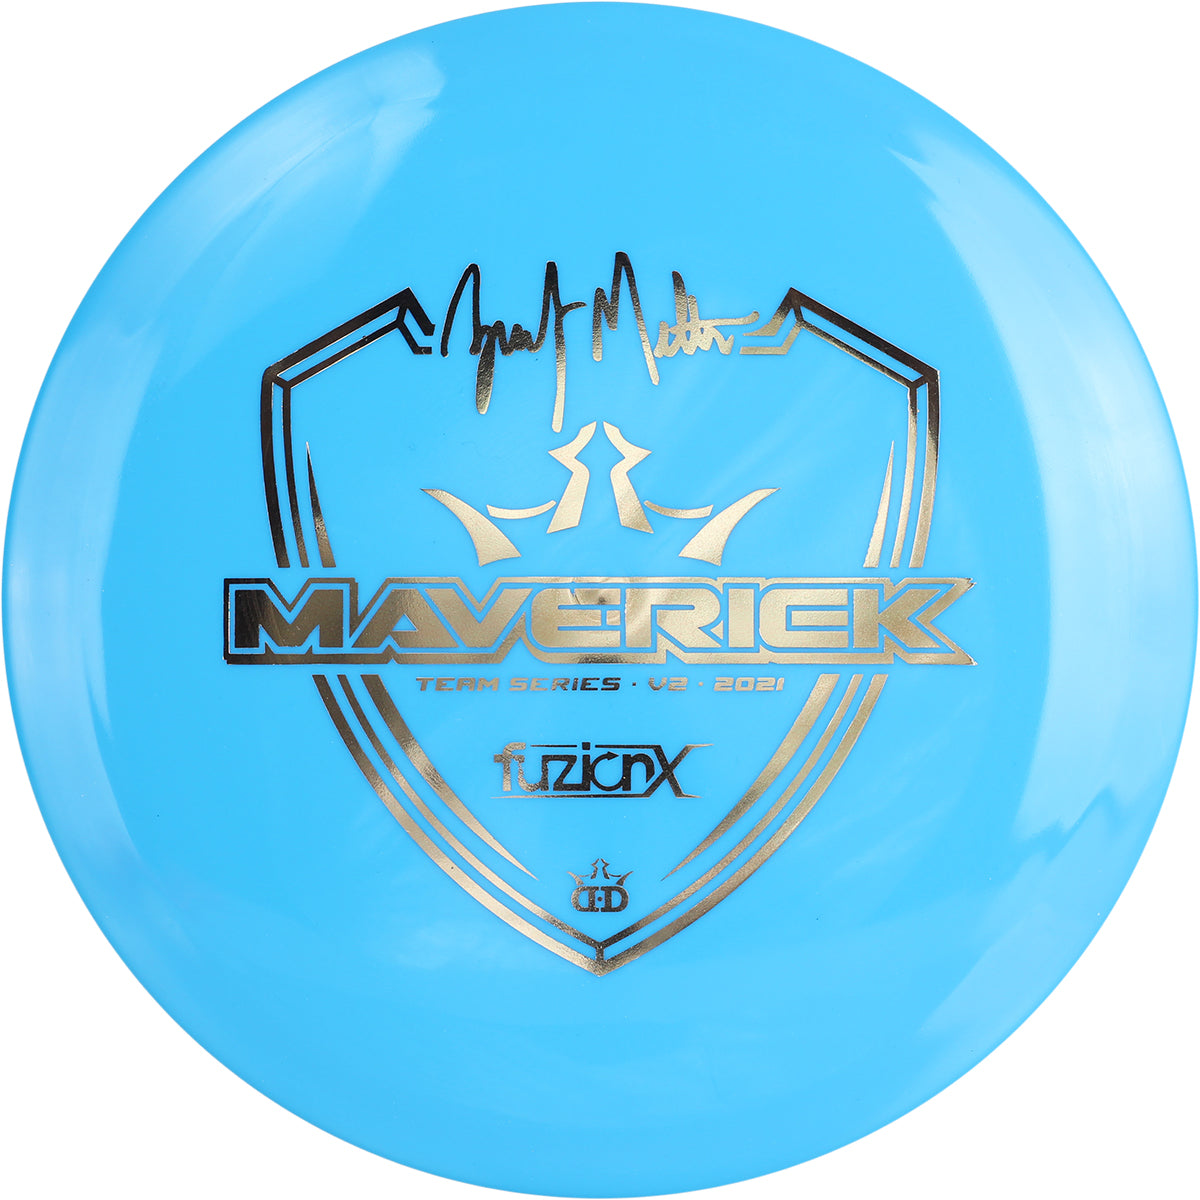 Fuzion-X Maverick - Zach Melton Team Series (V2 2021) (6634074275905)